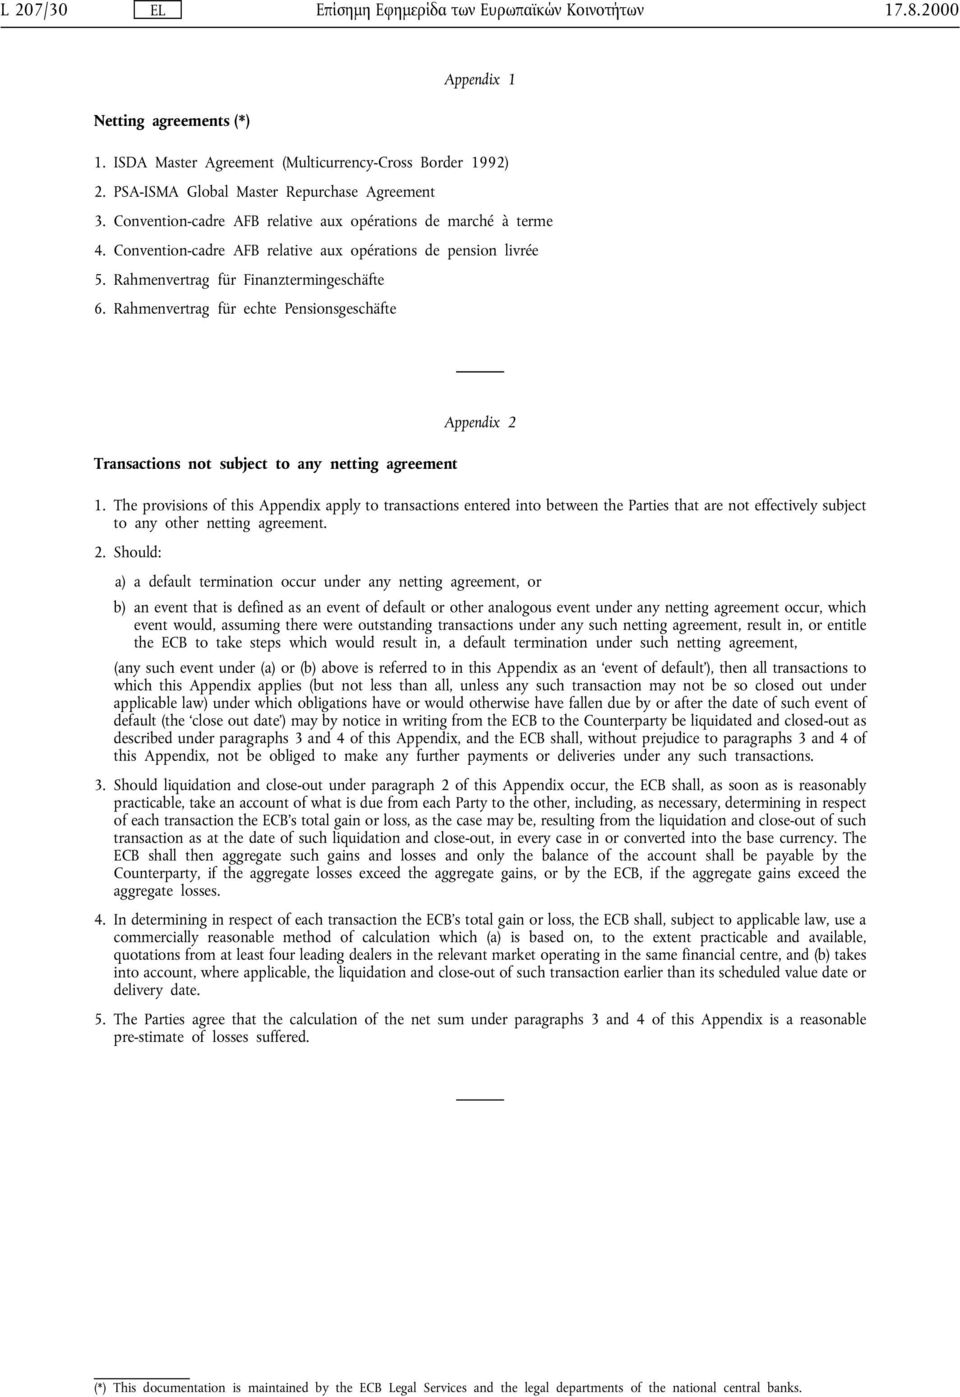 Rahmenvertrag für echte Pensionsgeschäfte Transactions not subject to any netting agreement Appendix 2 1.